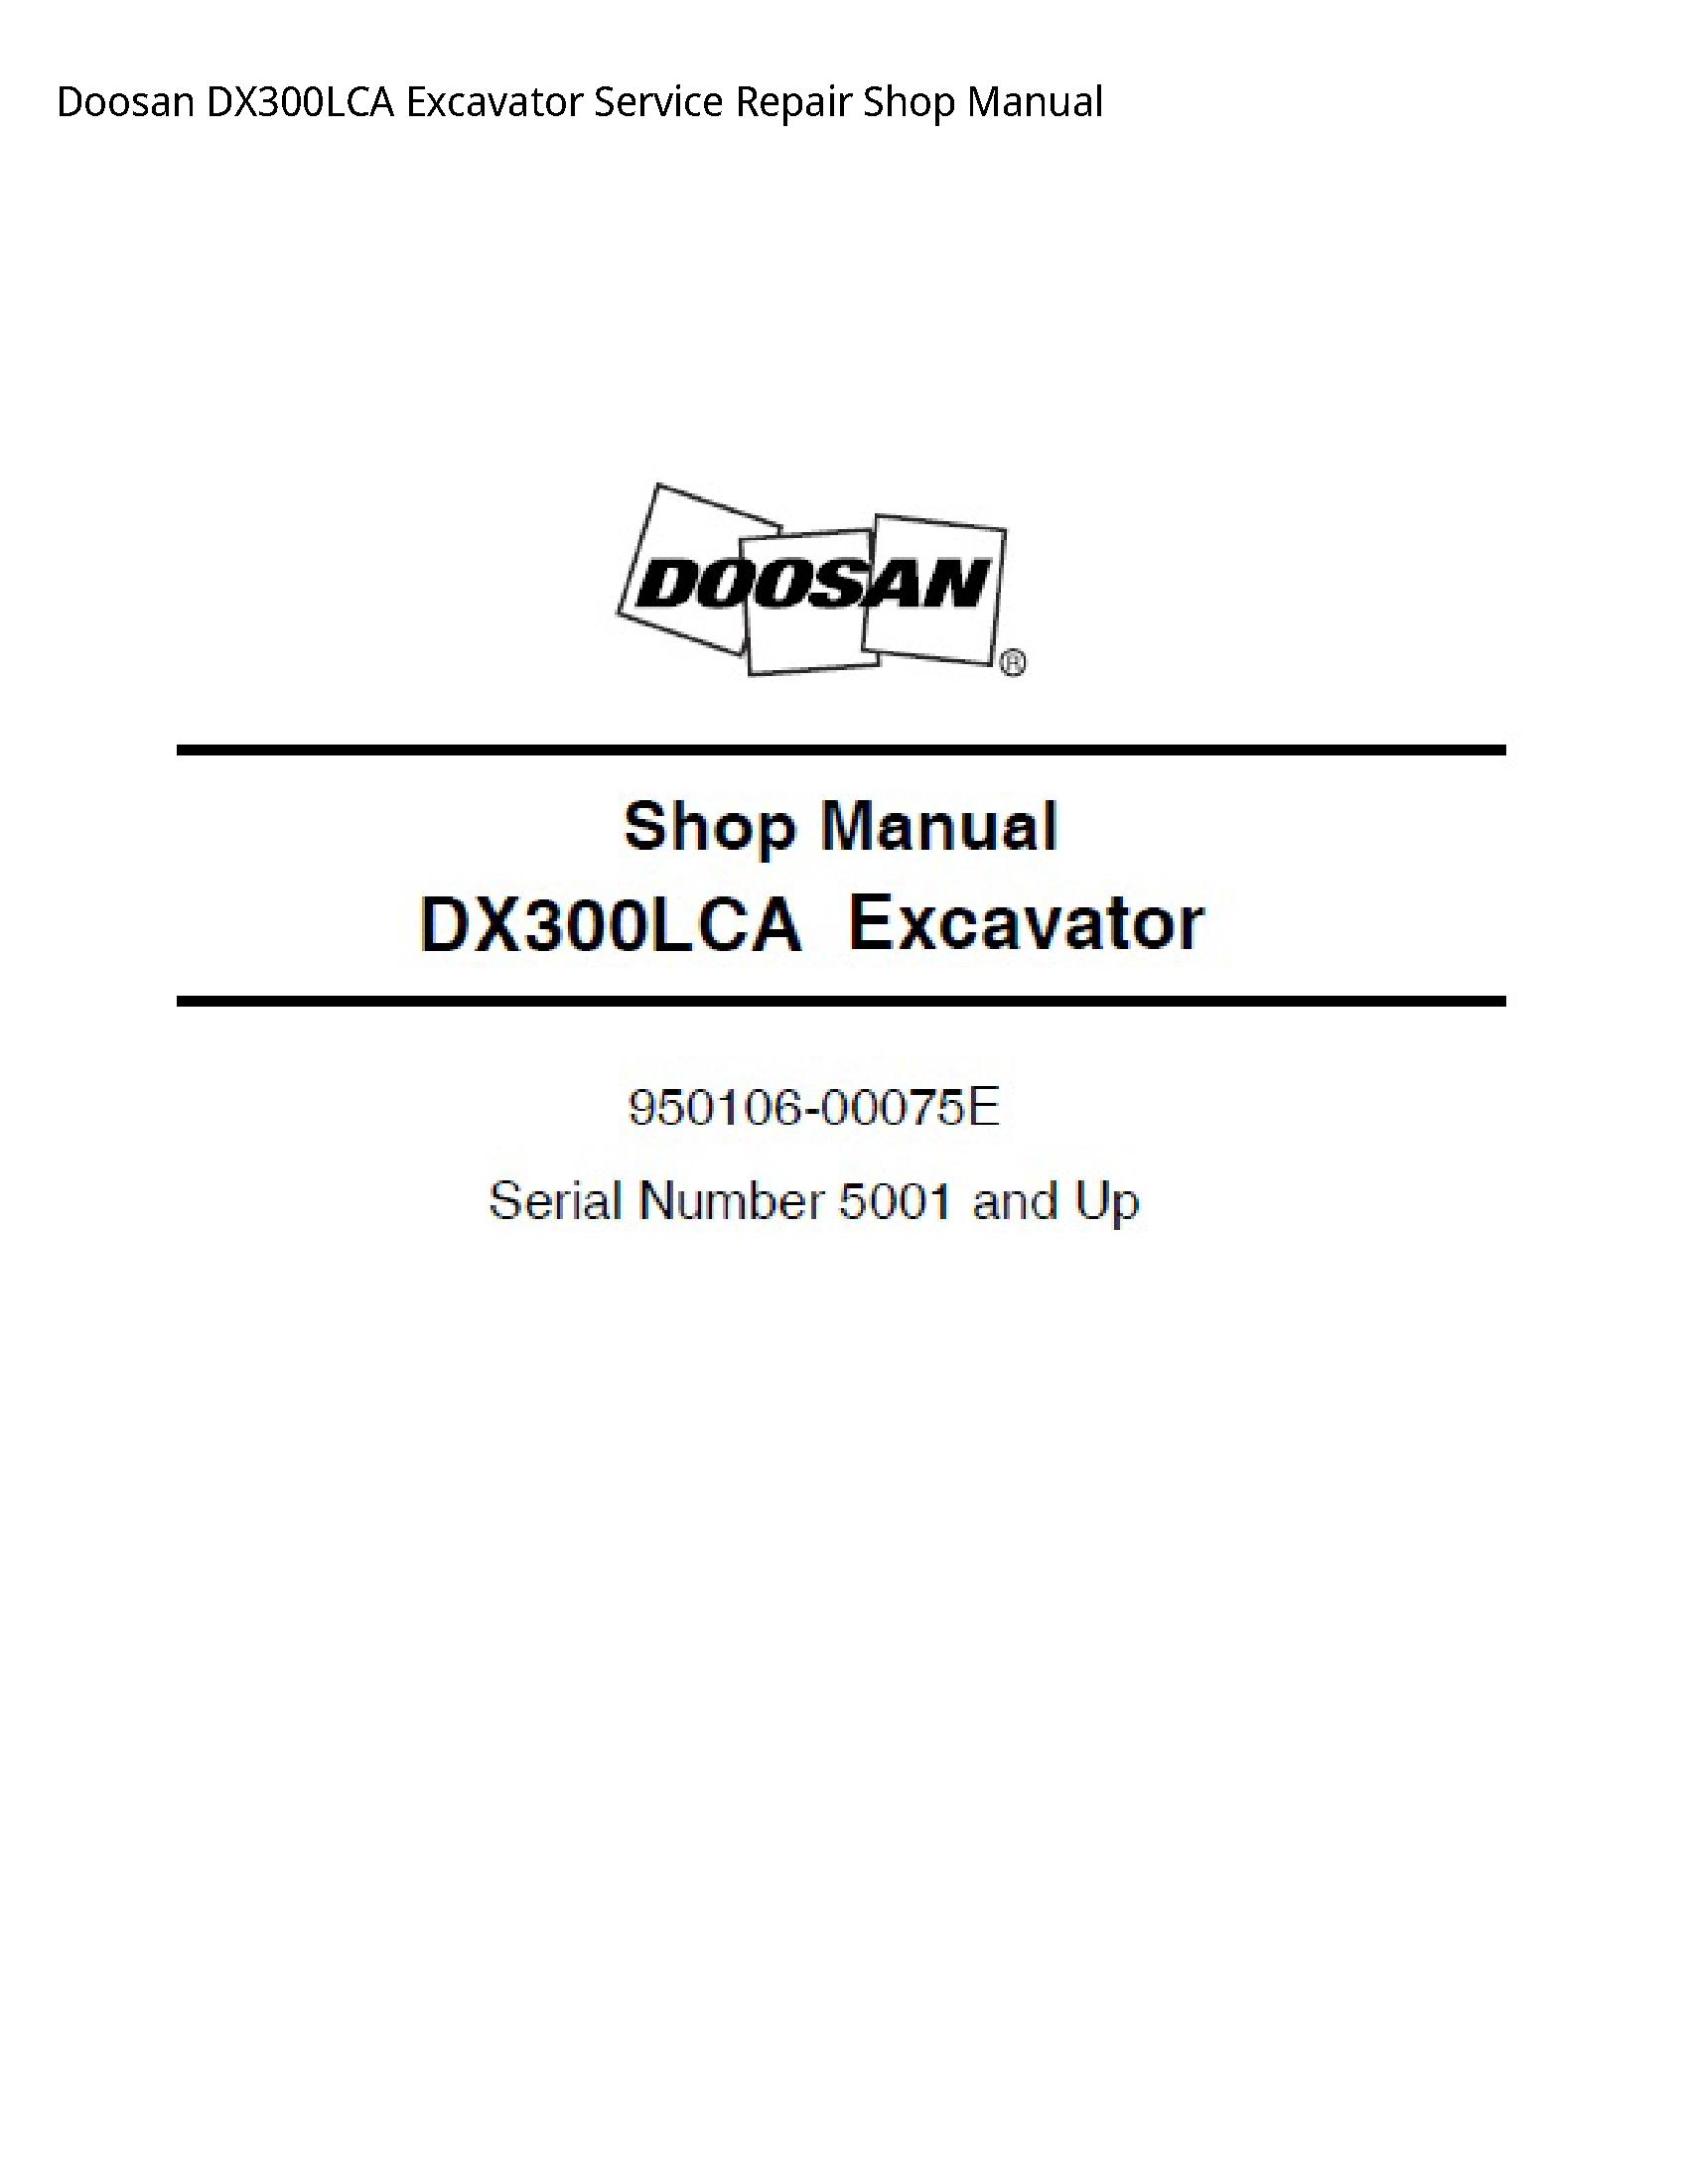 Doosan DX300LCA Excavator manual